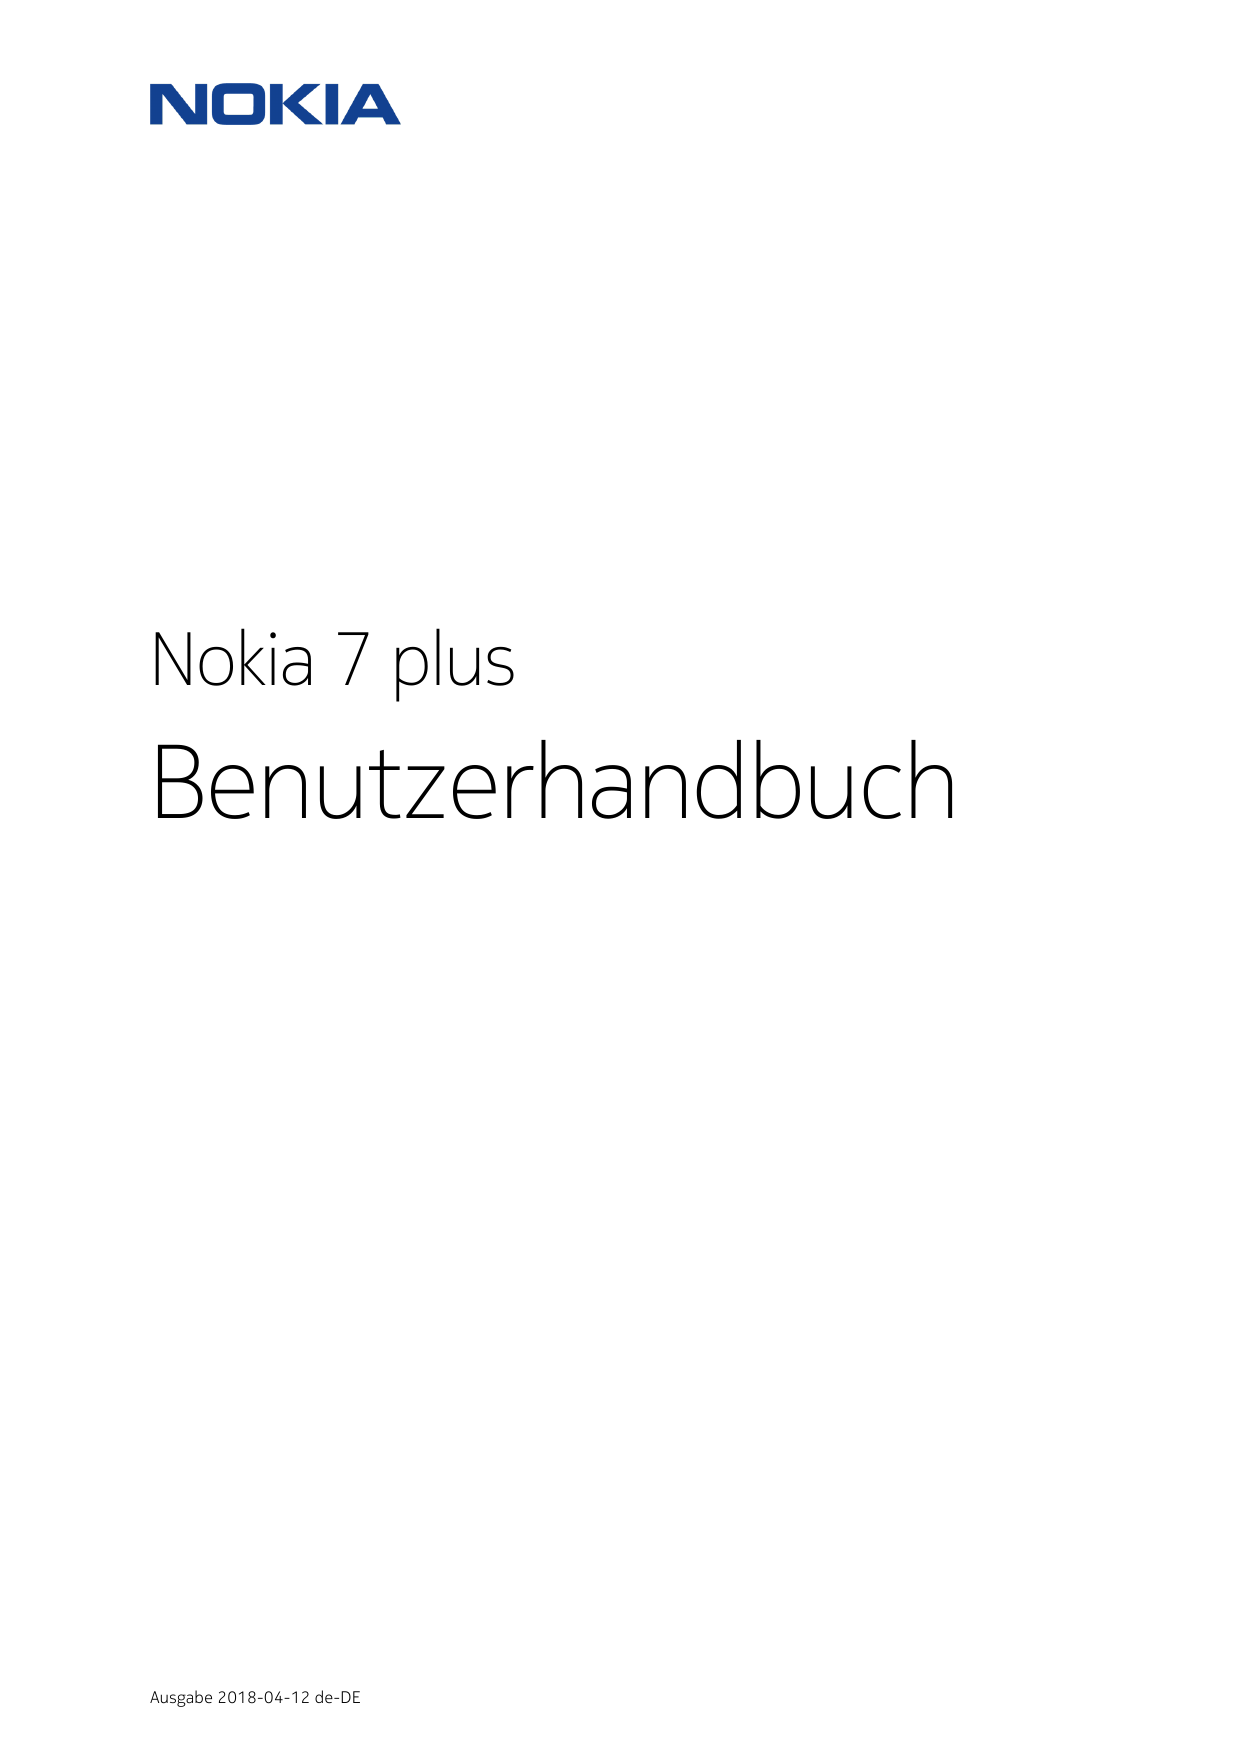 Nokia 7 plusBenutzerhandbuchAusgabe 2018-04-12 de-DE